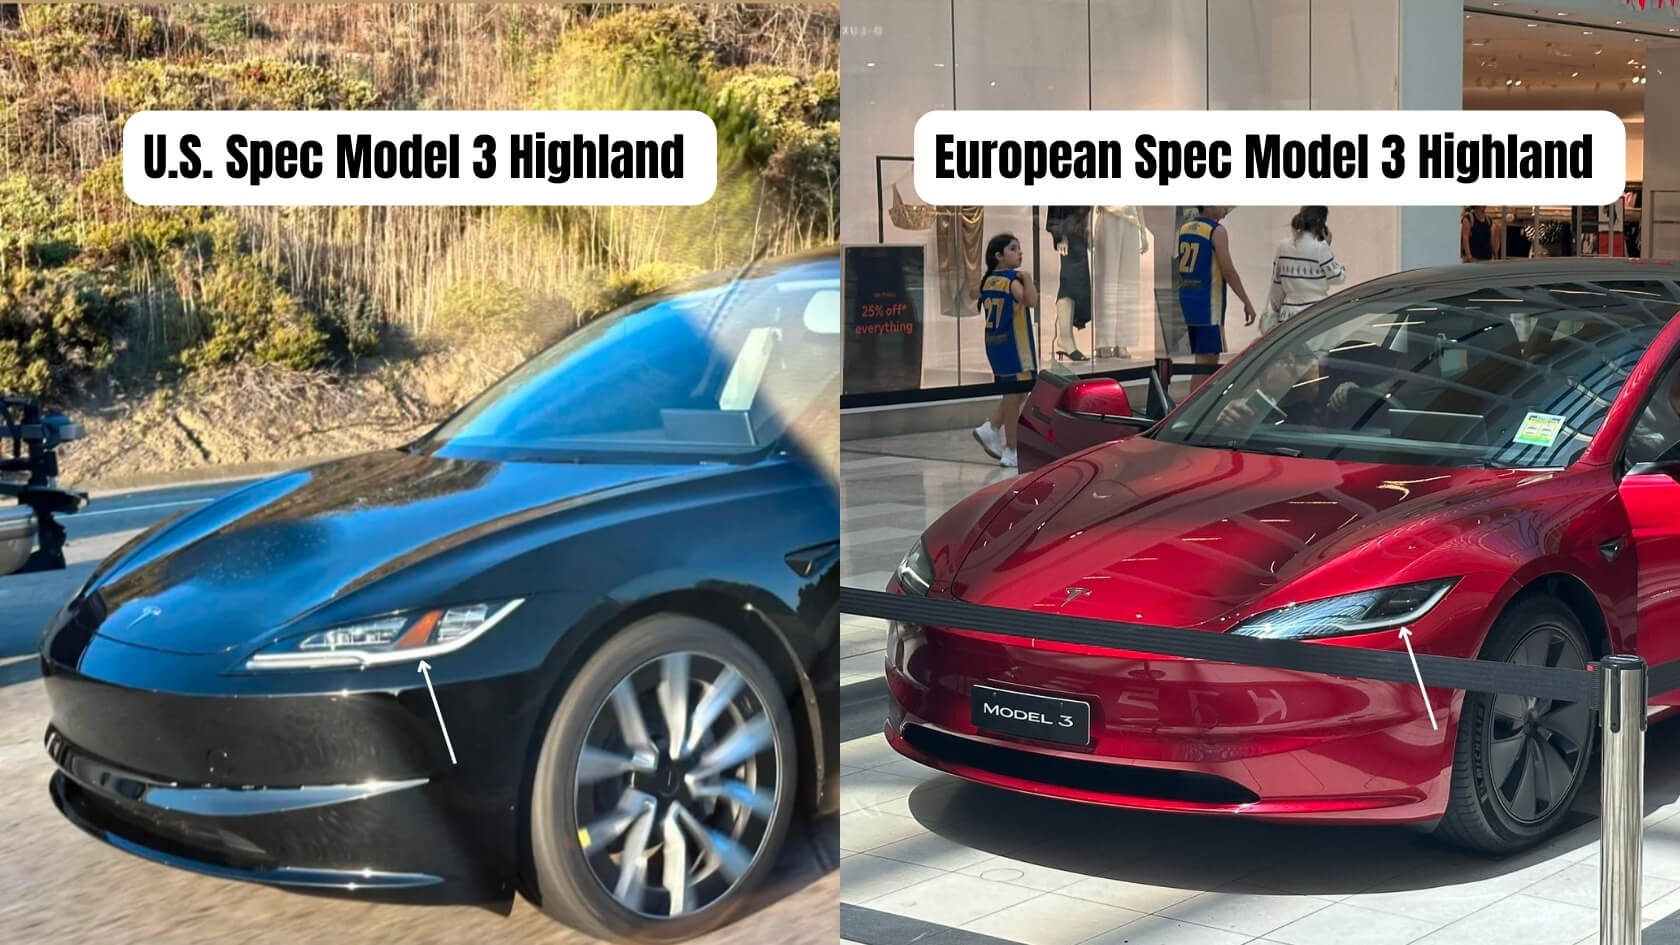 Model 3 Highland: U.S. vs Europe Differences